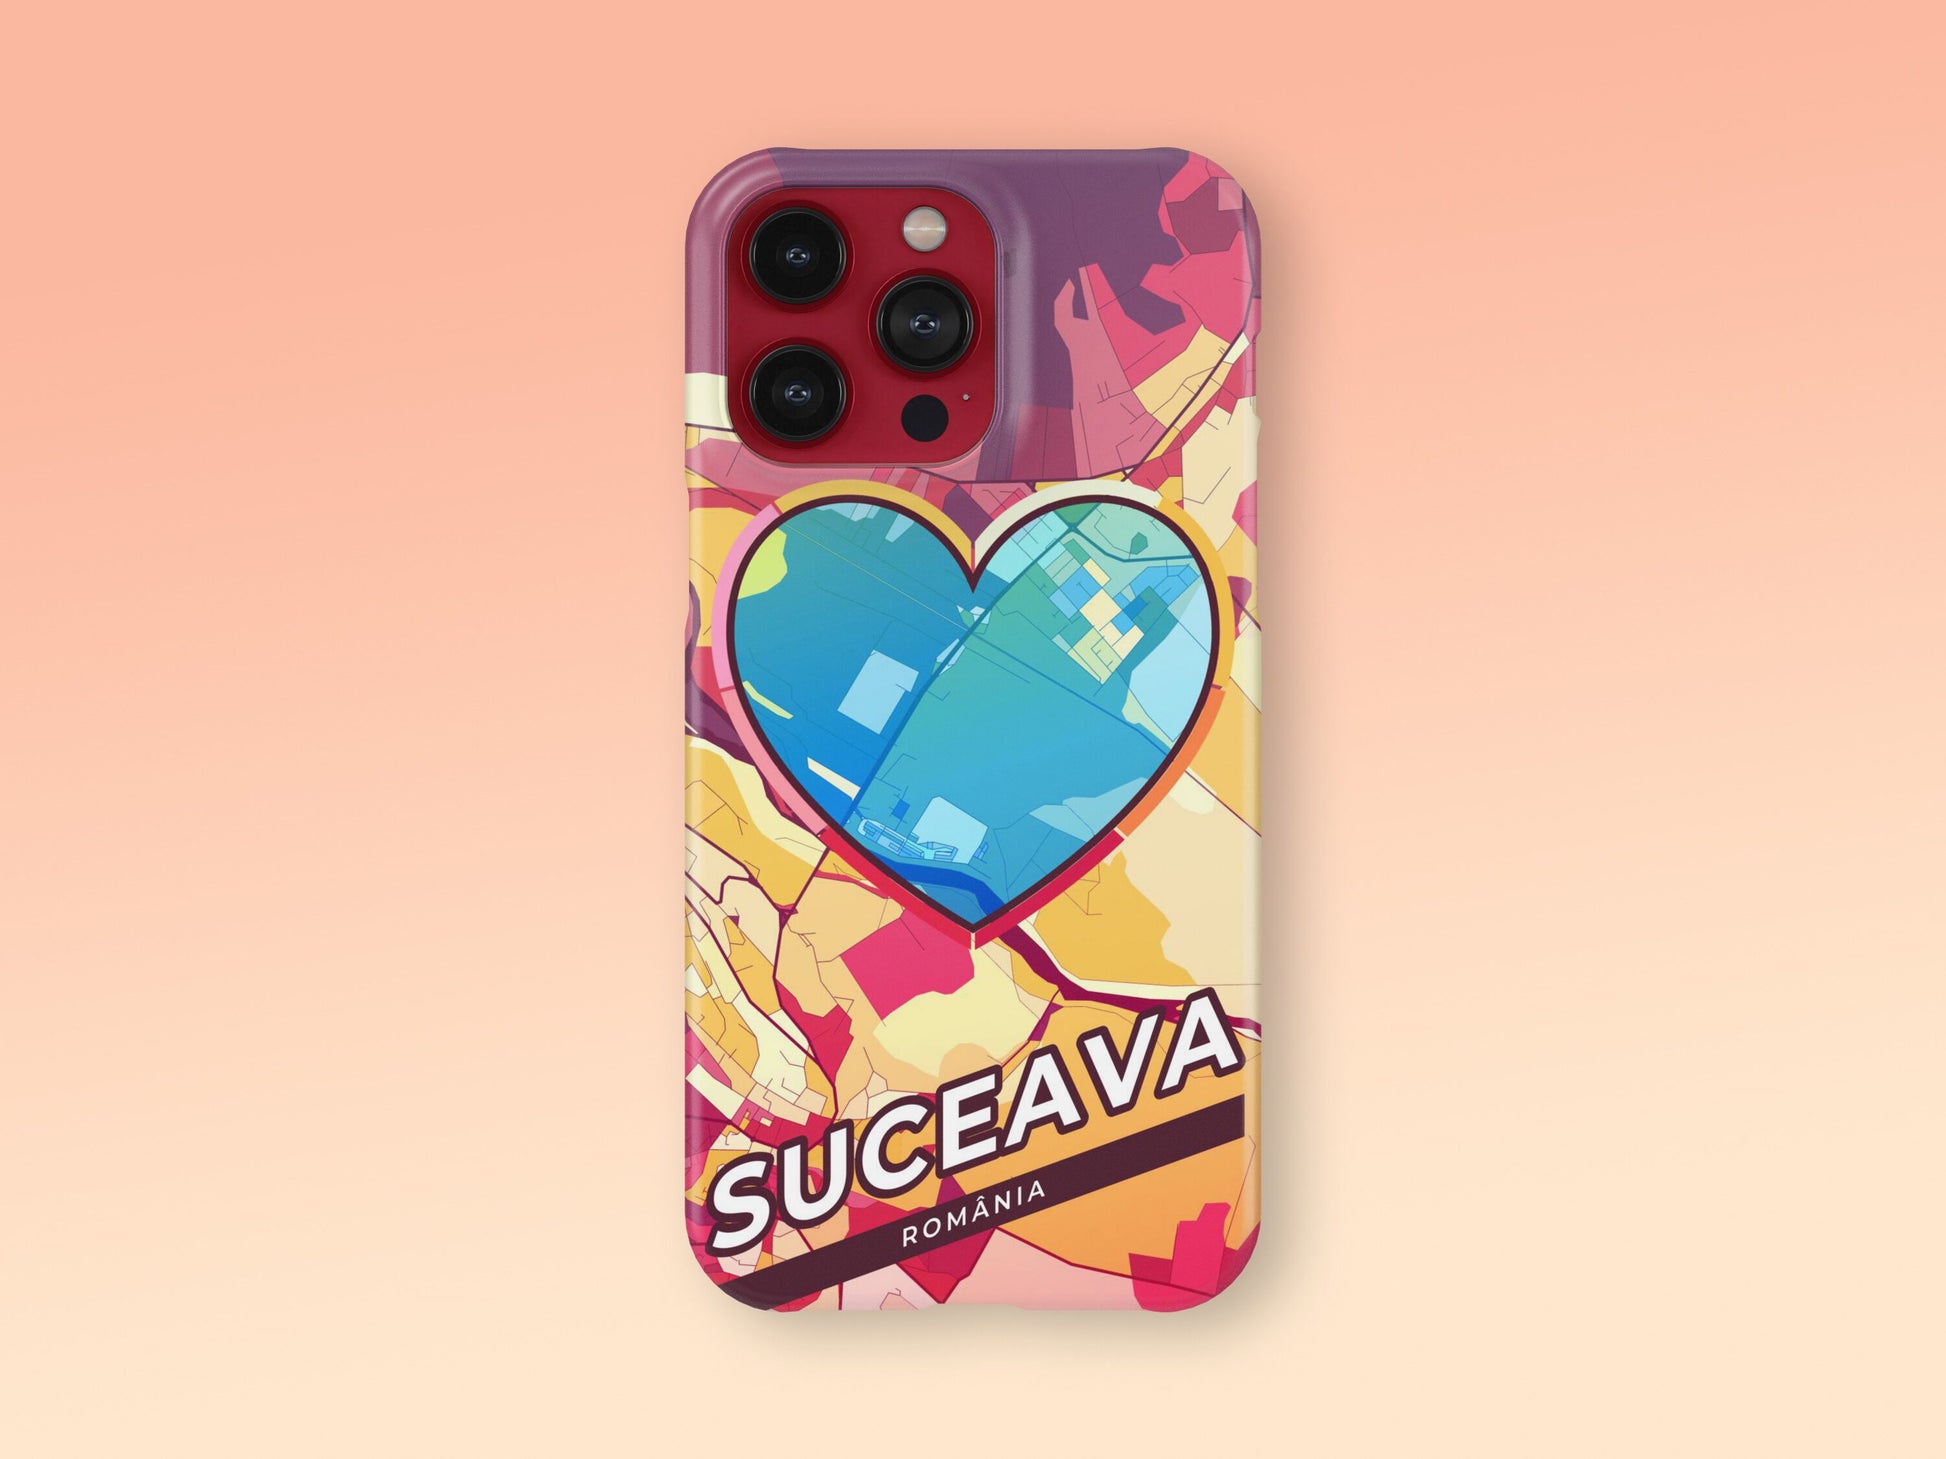 Suceava Romania slim phone case with colorful icon 2